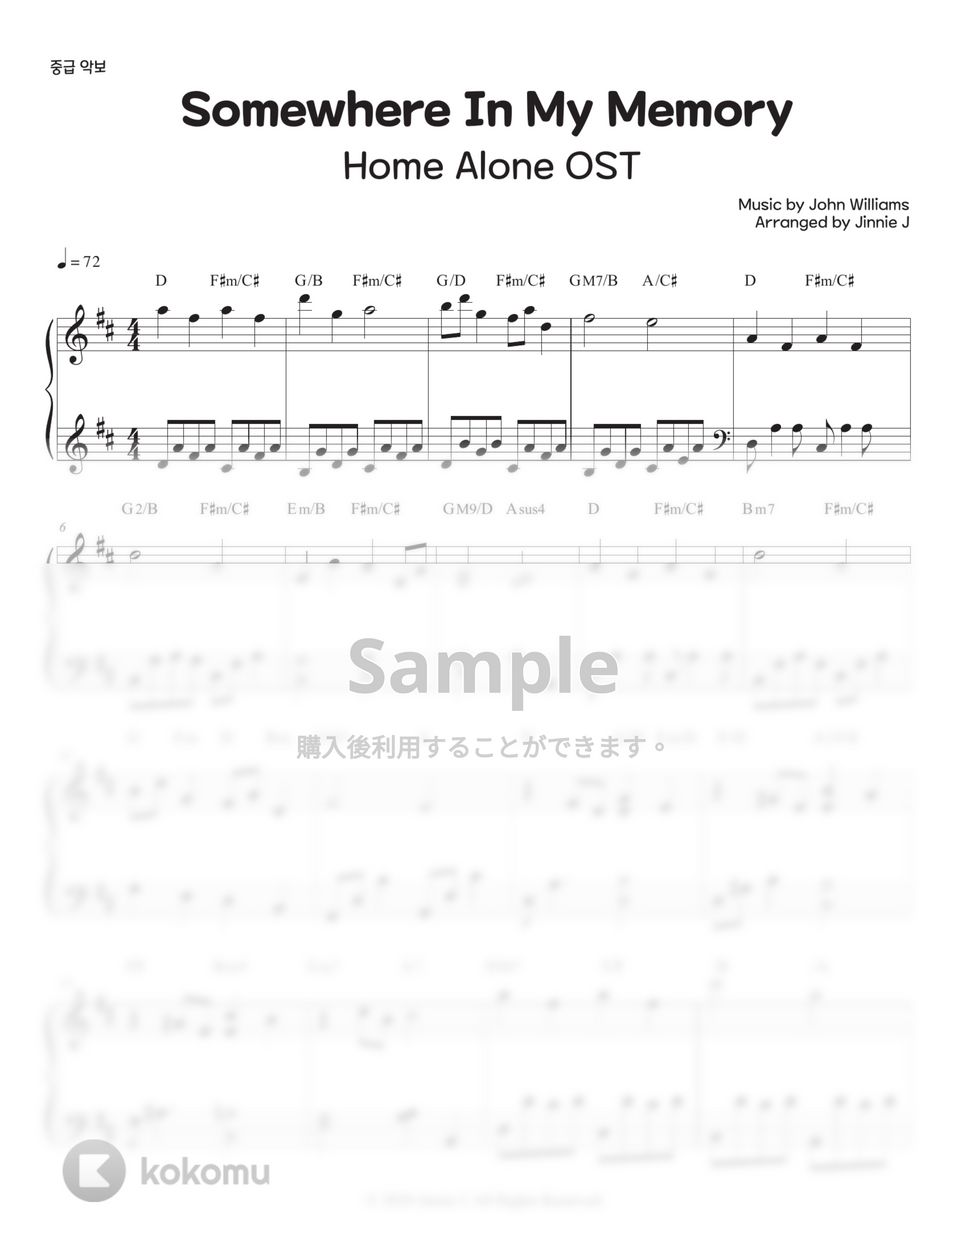 John Williams - Somewhere In My Memory (Home Alone OST) (中級レベル) by Jinnie J